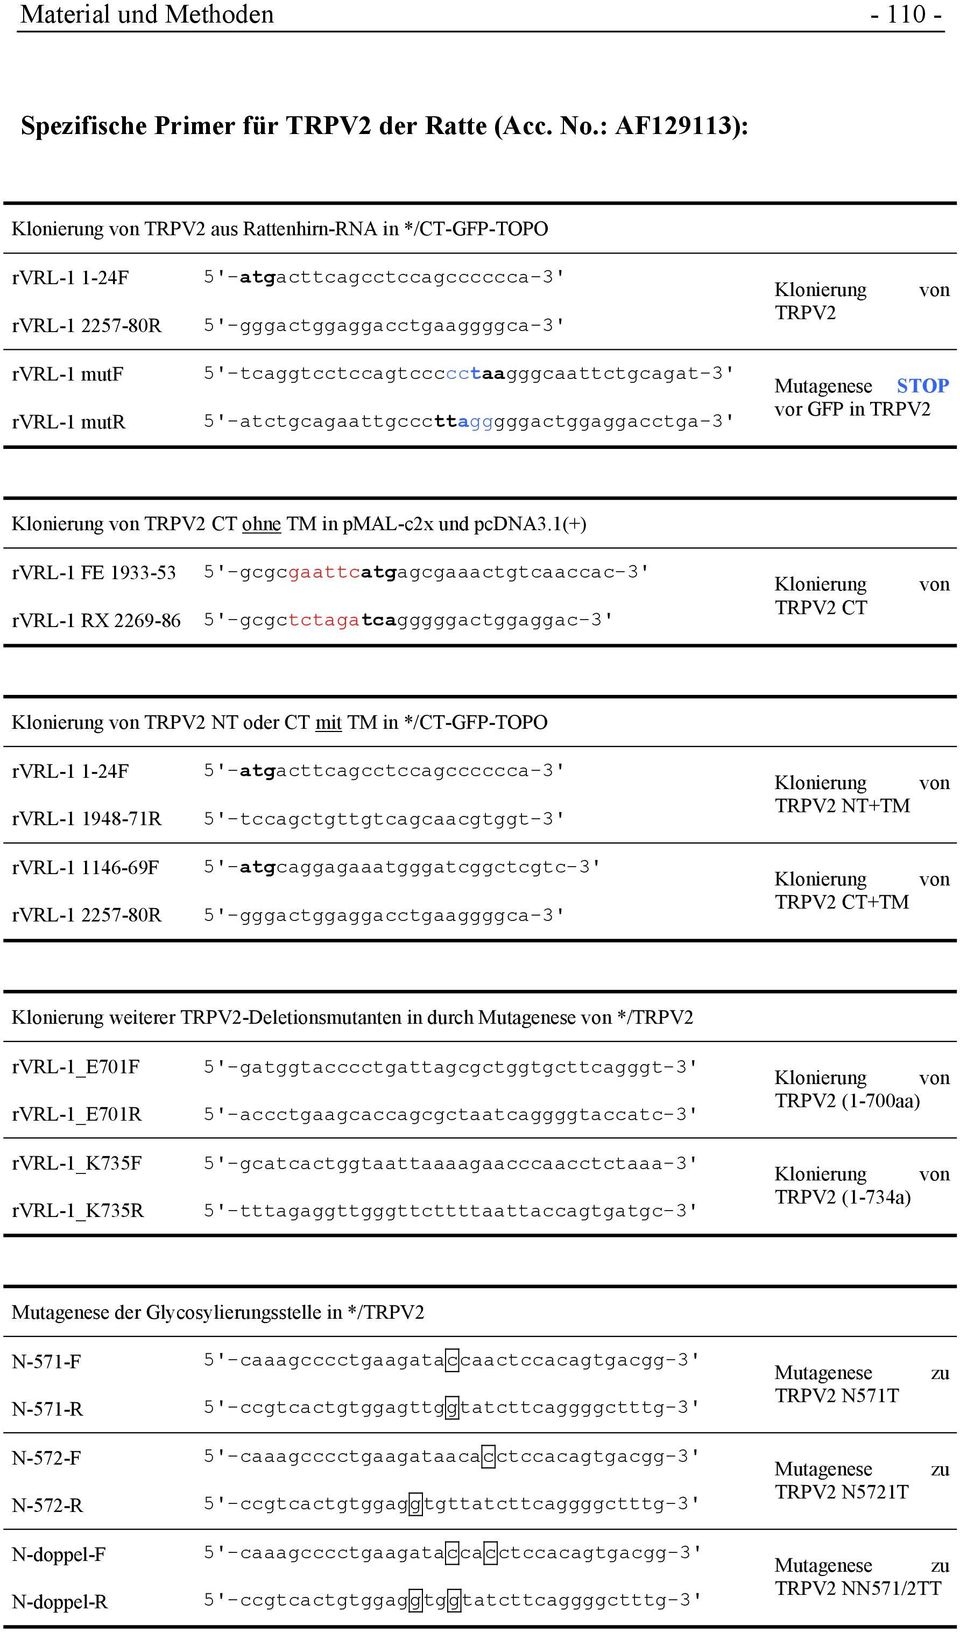 rvrl-1 mutr 5'-tcaggtcctccagtccccctaagggcaattctgcagat-3' 5'-atctgcagaattgcccttagggggactggaggacctga-3' Mutagenese STOP vor GFP in TRPV2 Klonierung von TRPV2 CT ohne TM in pmal-c2x und pcdna3.